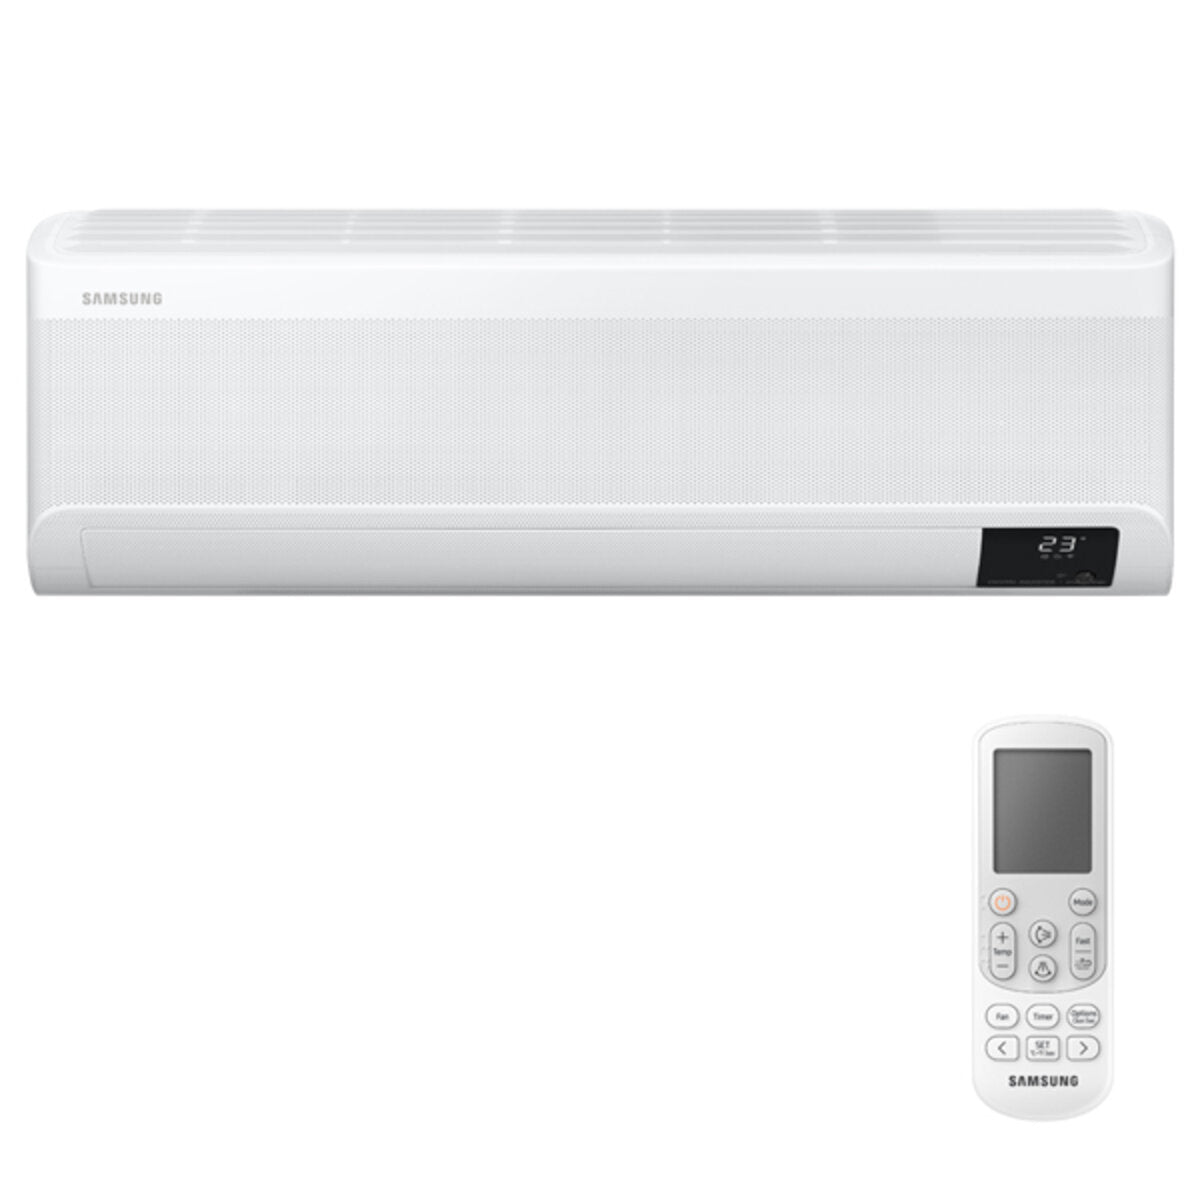 Samsung windfree Avant dual split 9000 + 9000 BTU air conditioner A +++ wifi outdoor unit 5.0 kW